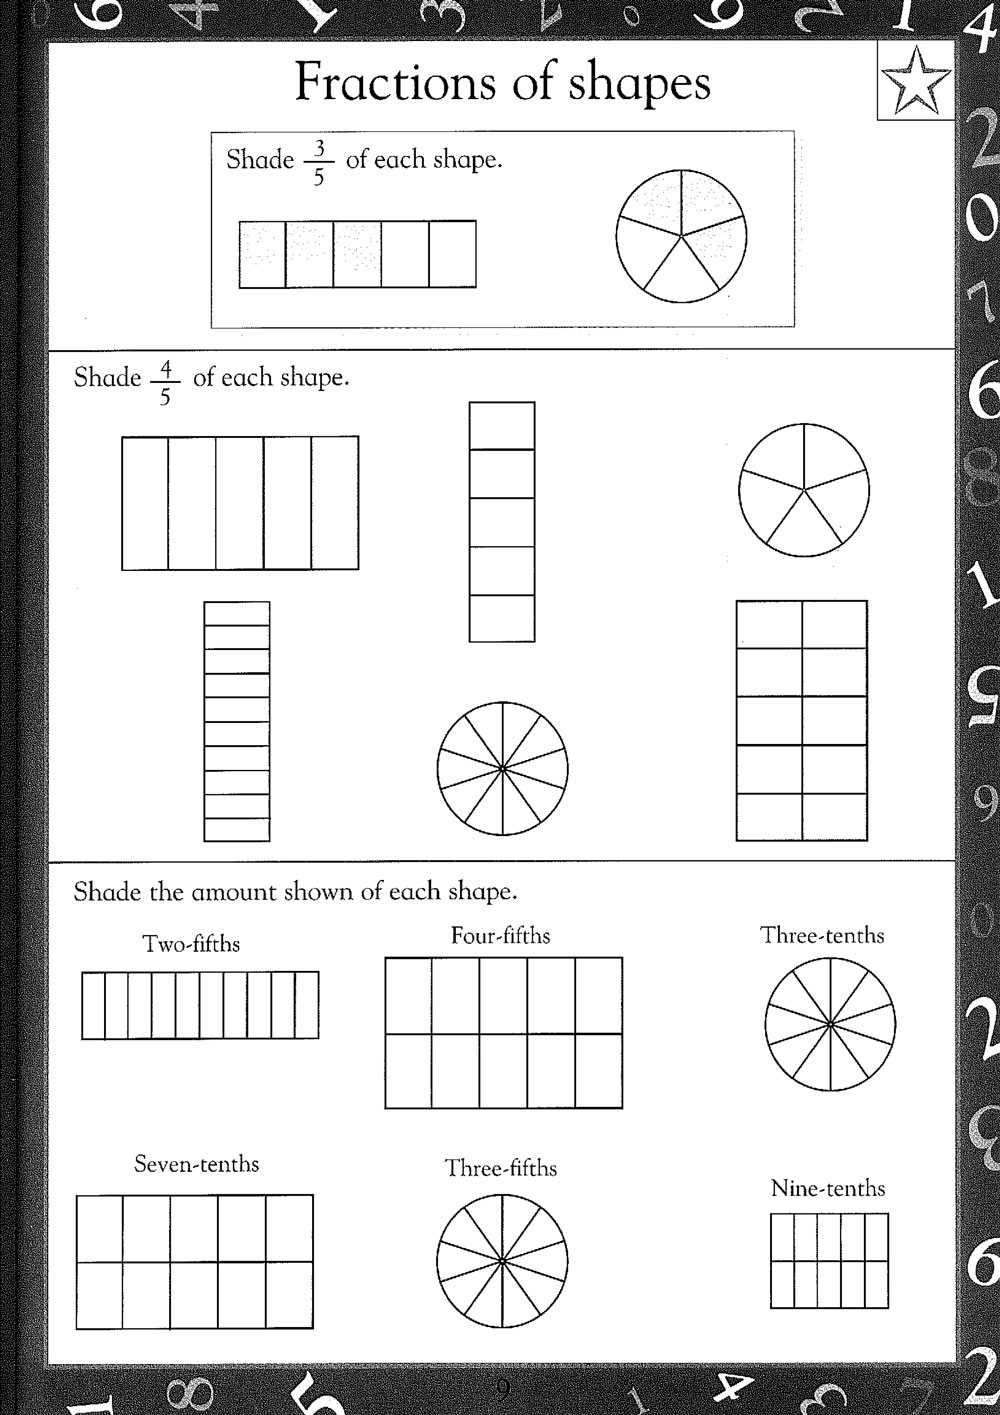 13 Best Images of Addition Grid Worksheet - Math Drills ...